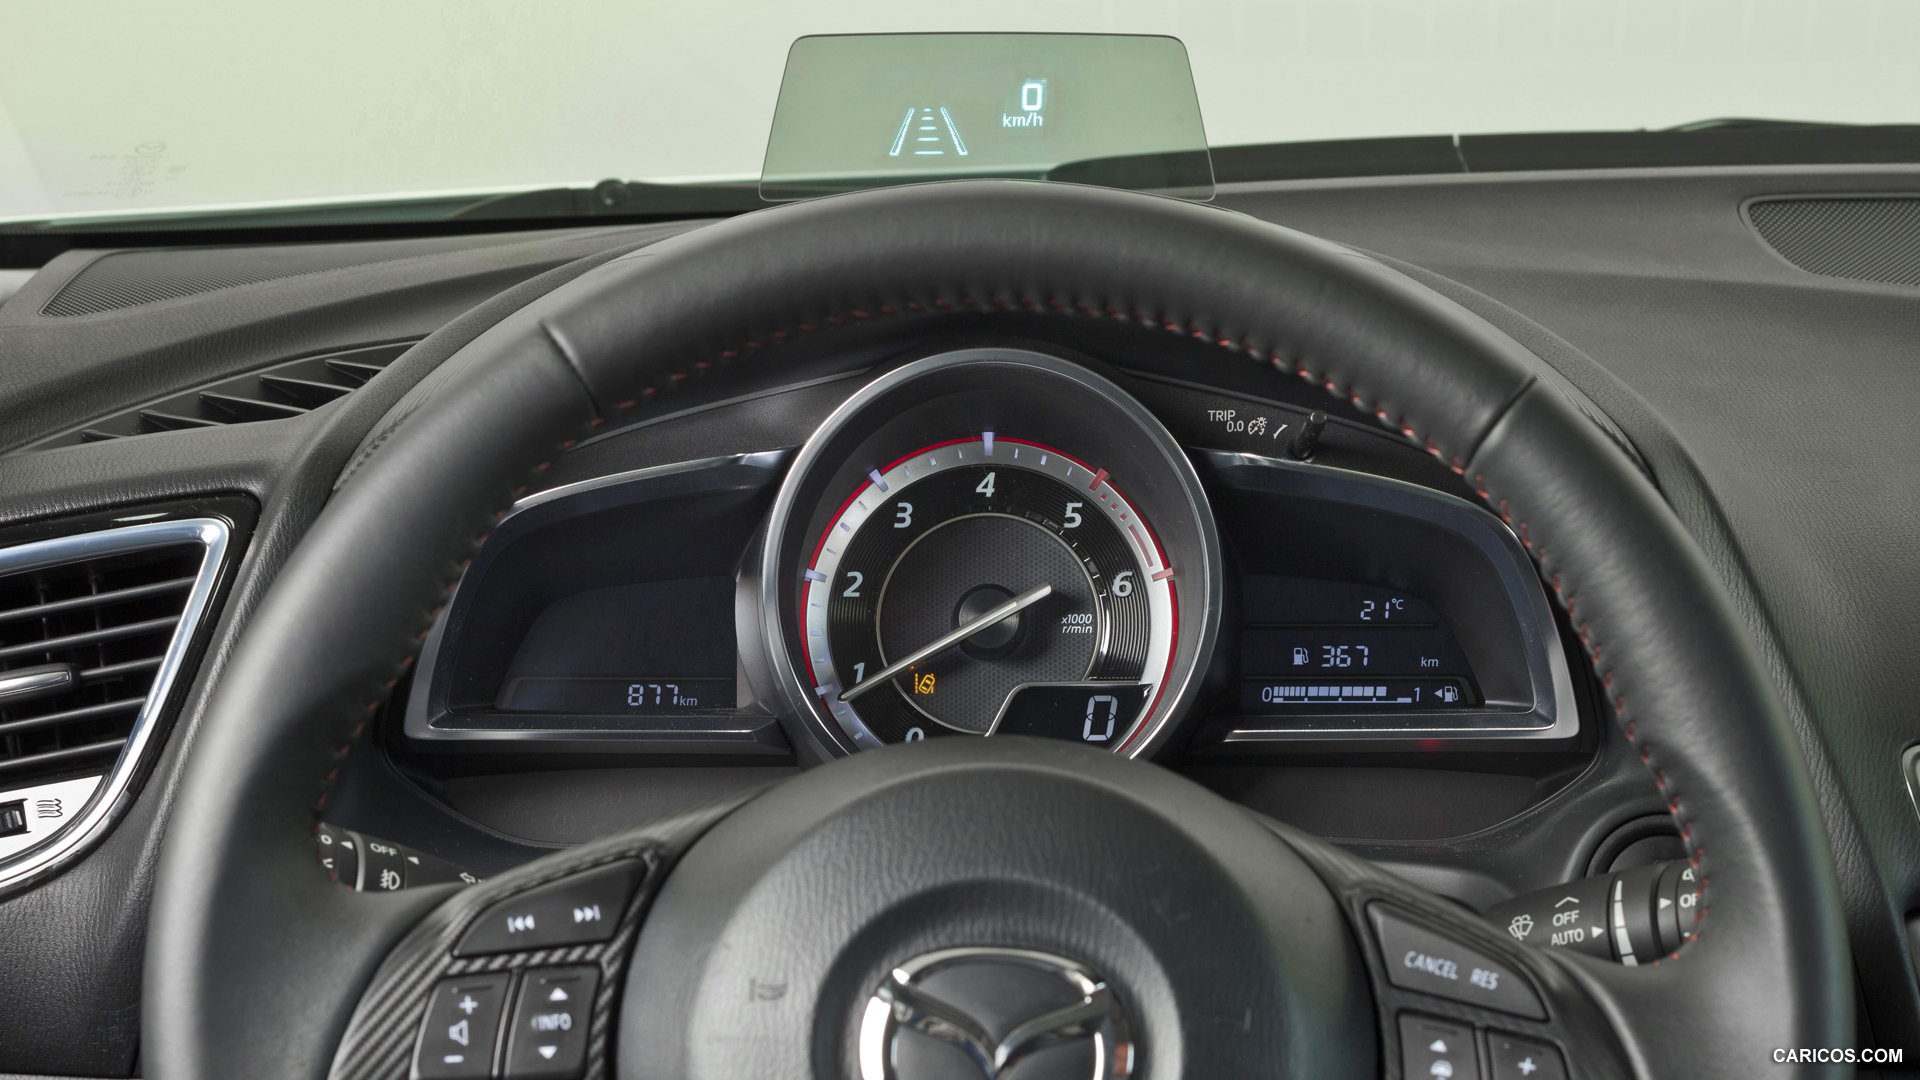 2014 Mazda3 Sedan Head-up Display - Instrument Cluster, #87 of 98